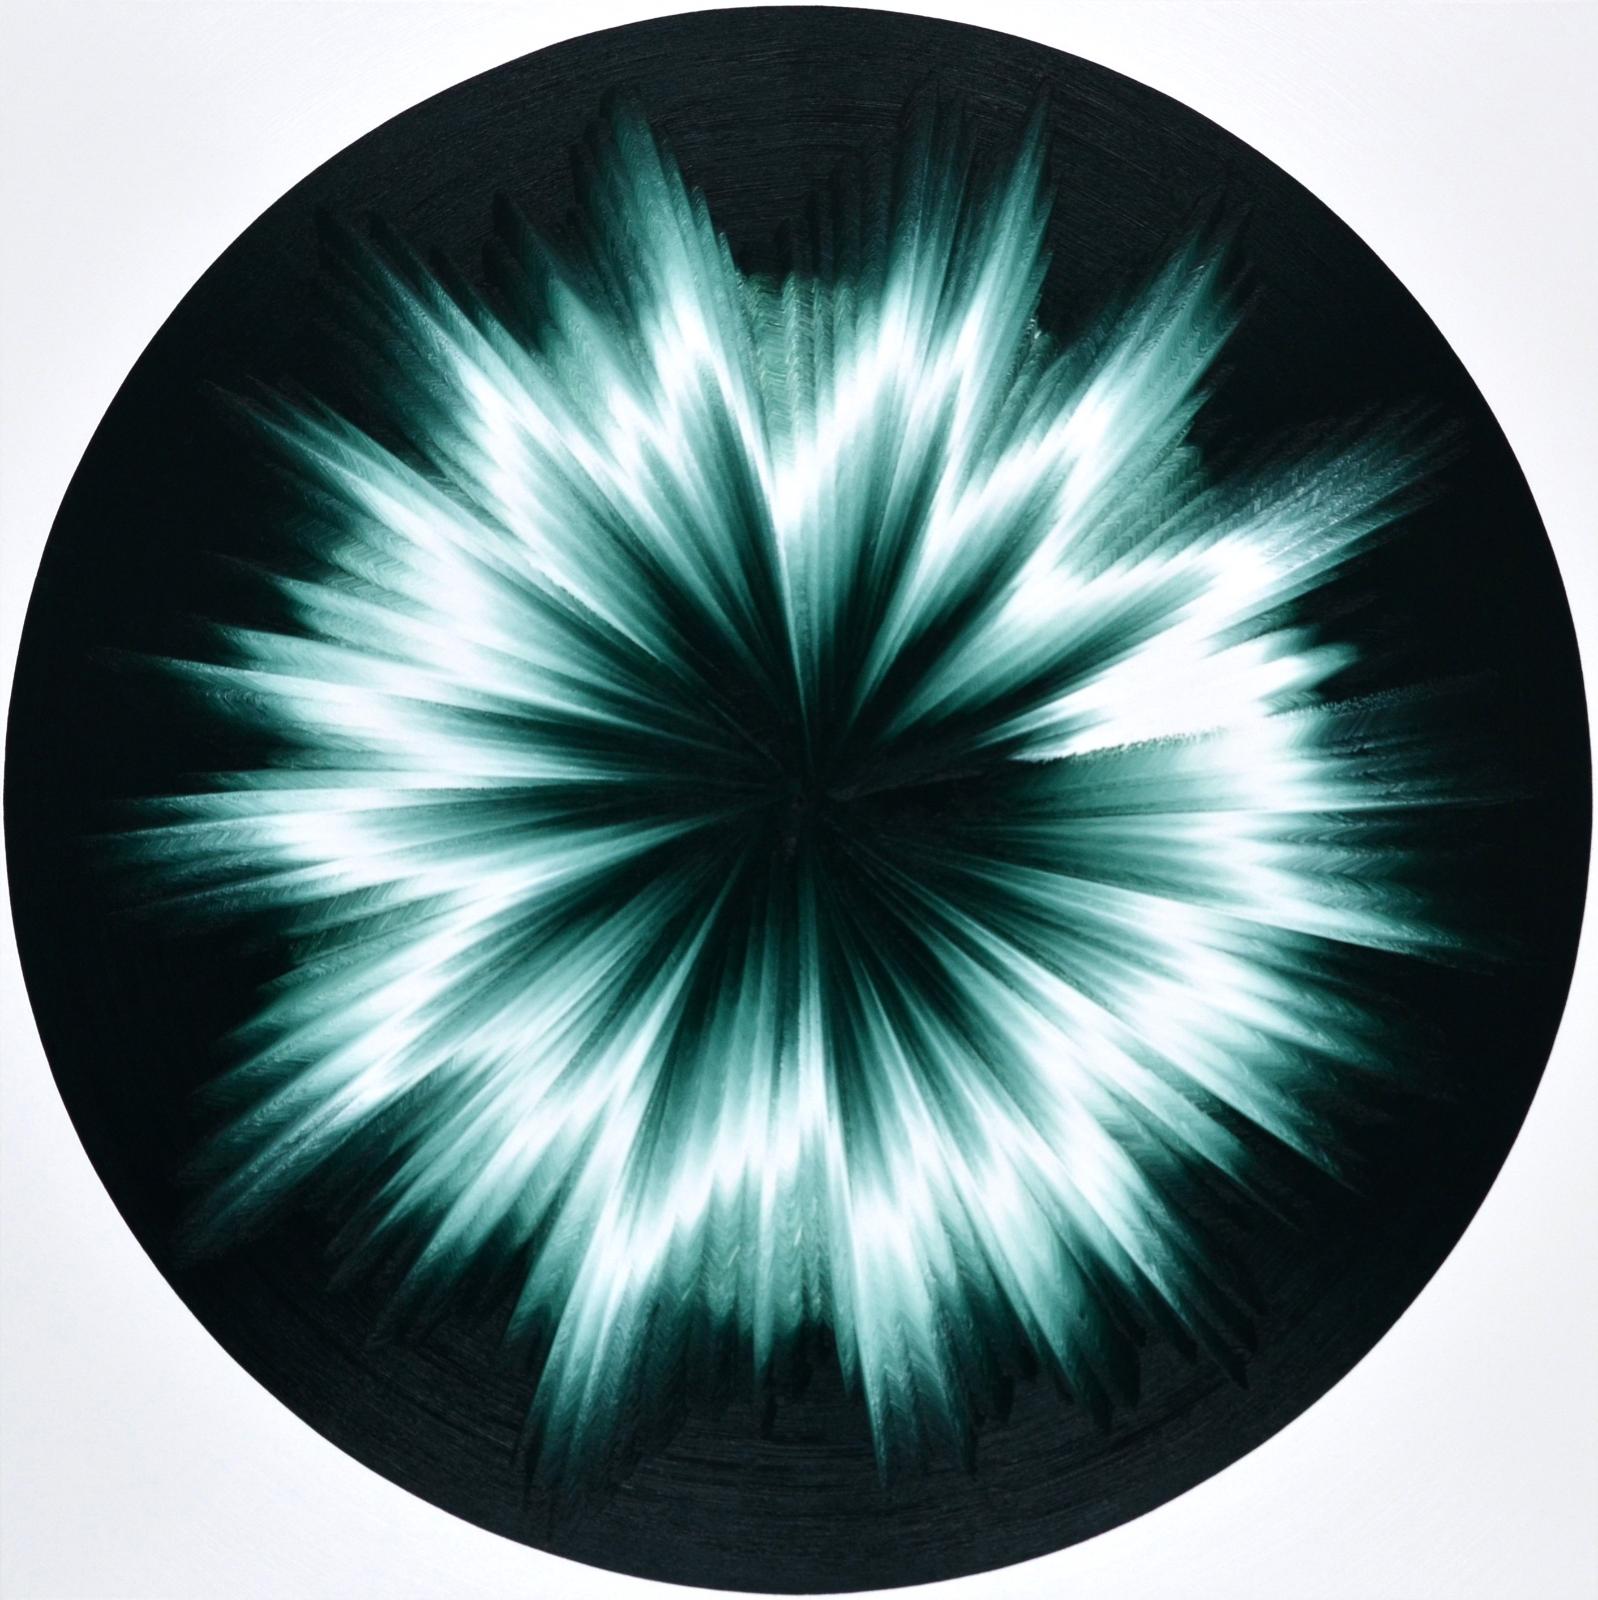 Vera Leutloff, Circular Oszillation: Grünlack dunkel, 2020, Öl auf Leinwand, 120 cm x 120 cm, Preis auf Anfrage, lev003de